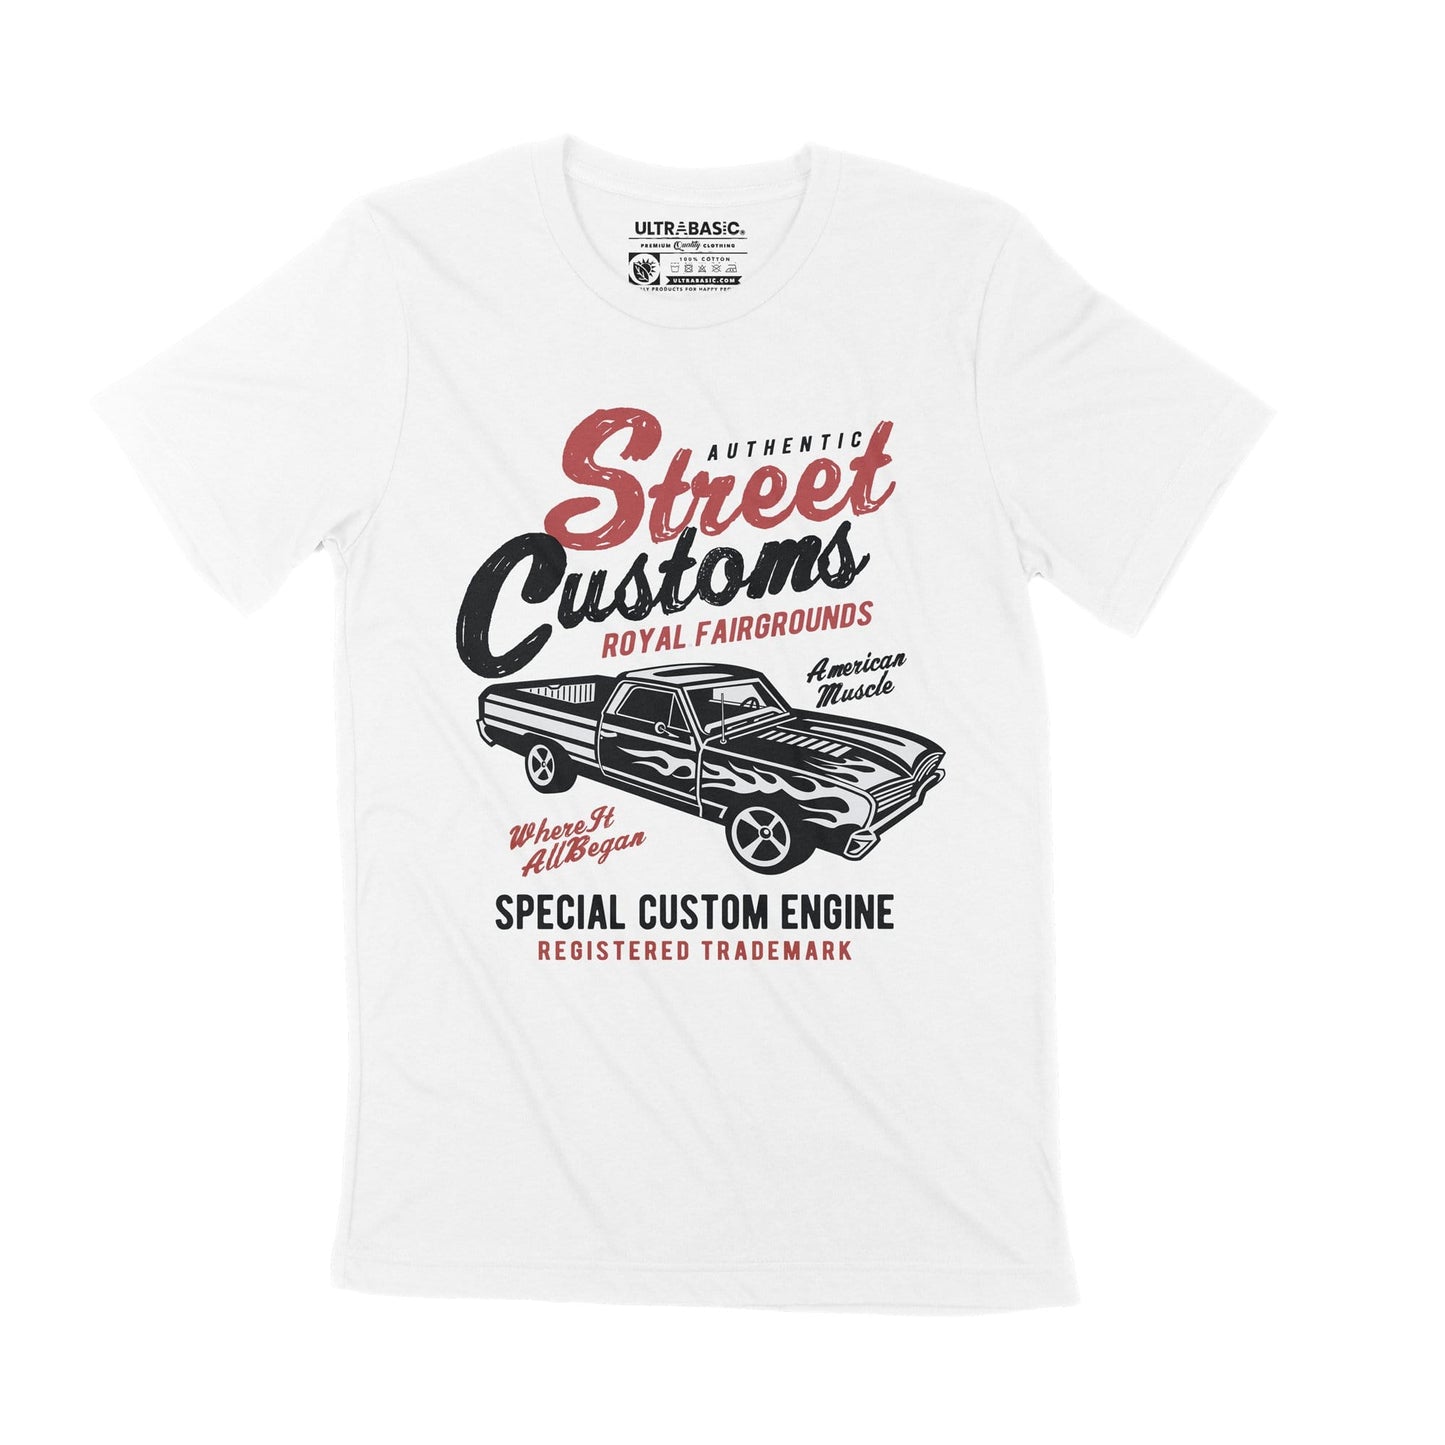 ULTRABASIC Men's Graphic T-Shirt Authentic Street Customs - Special Custom Engine